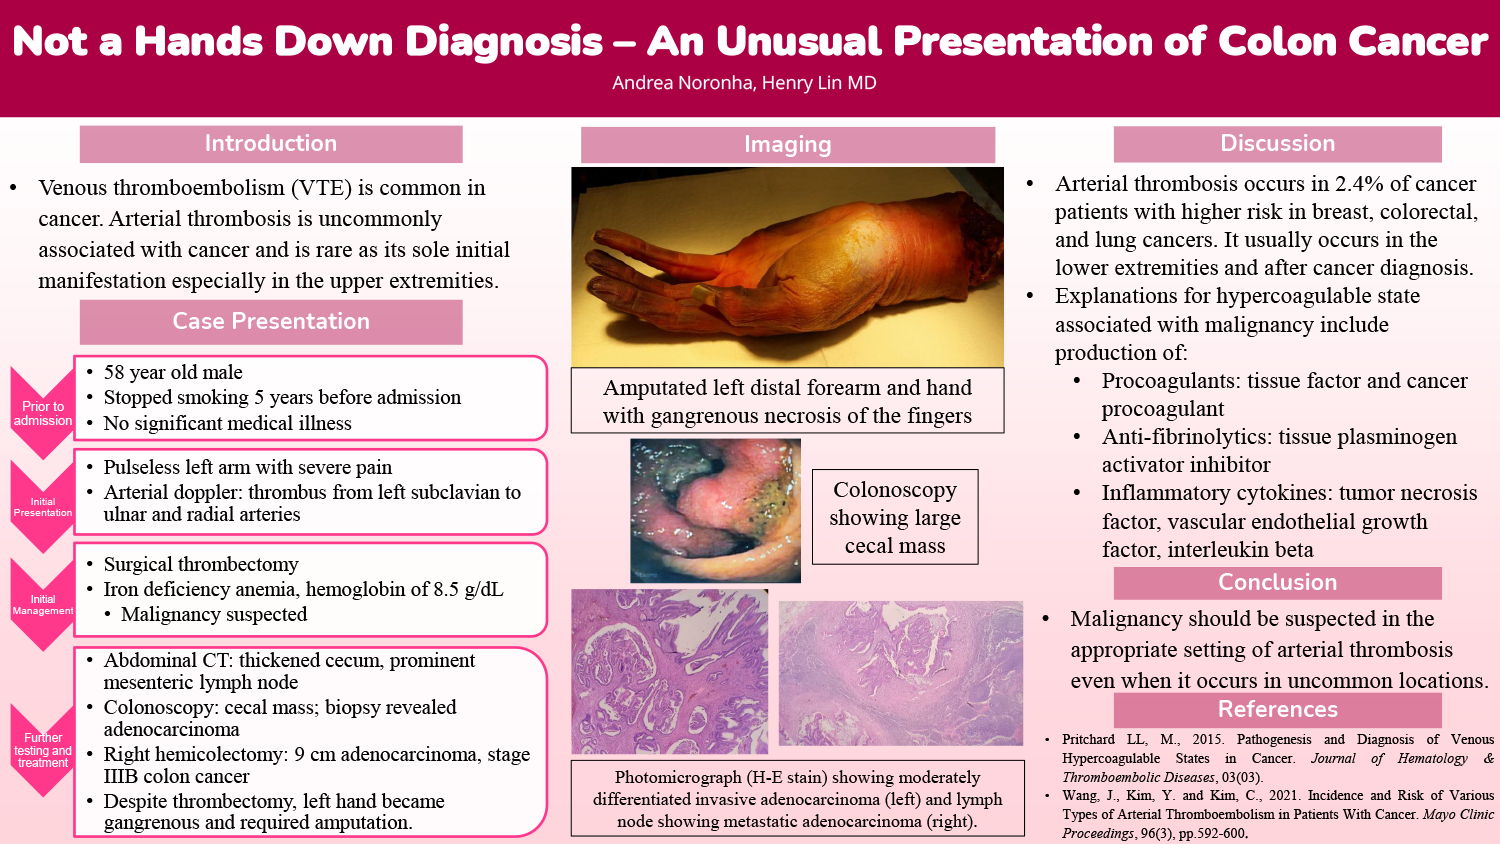 Andrea Noronha - PAS-62-Not-a-Hands-Down-Diagnosis-An-Unusual-Presentation-of-Colon-Cancer